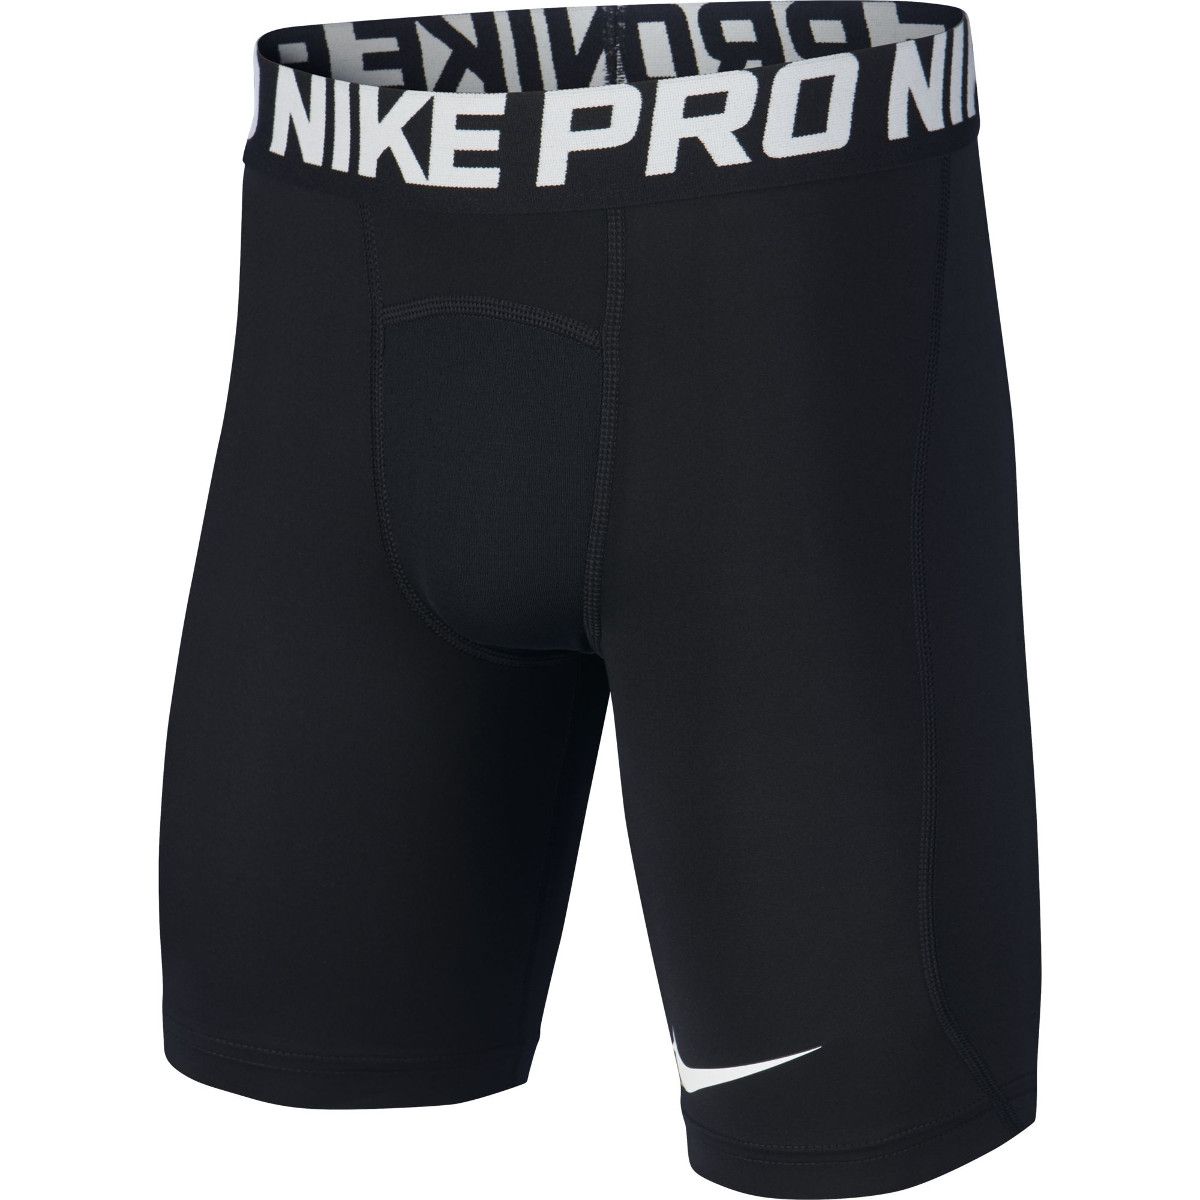 UNIFORM Nike Team Pro Compression Shorts - Men’s